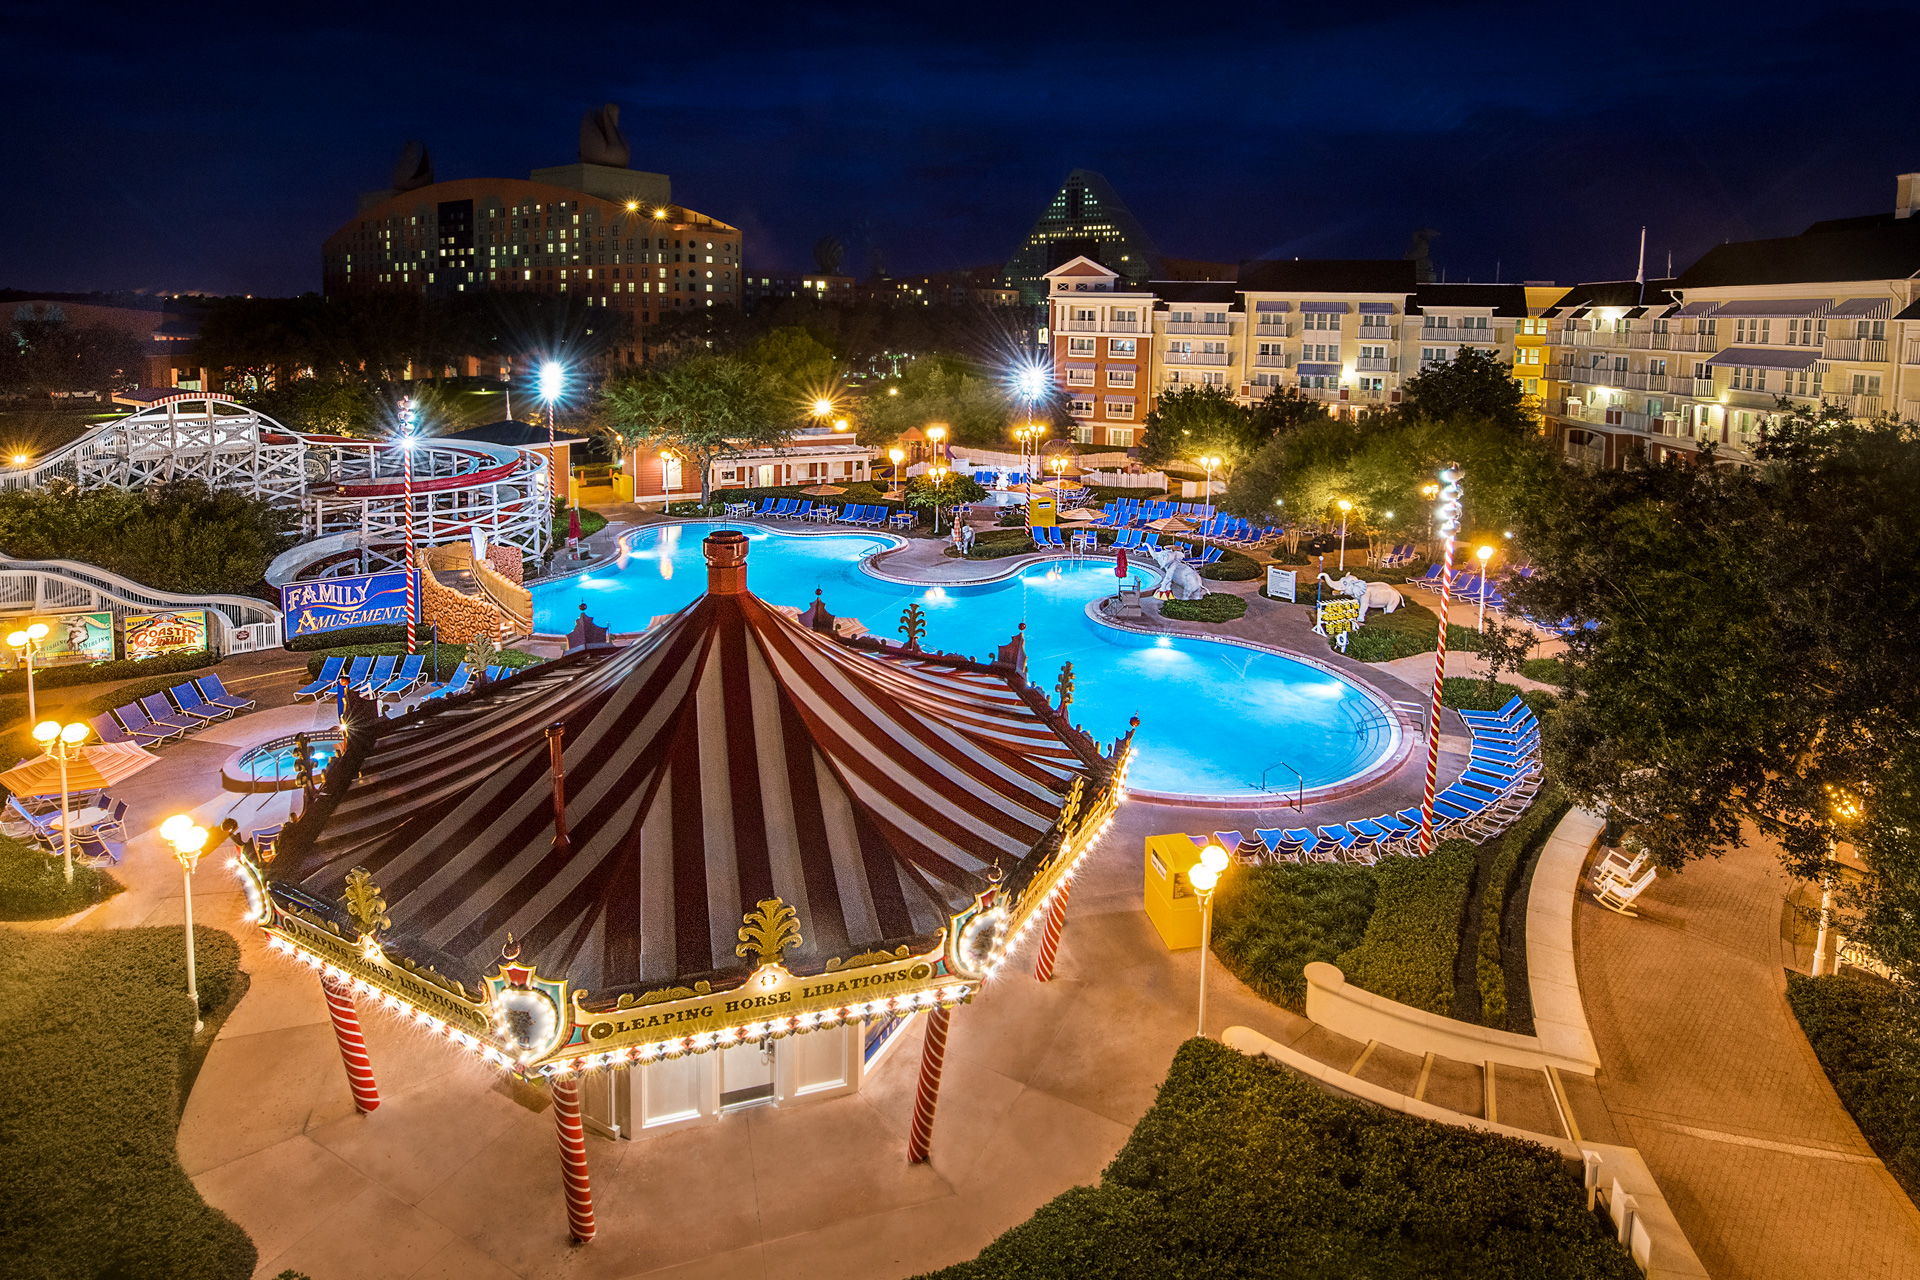 11 Best Disney World Resort Hotels for Families in 2020